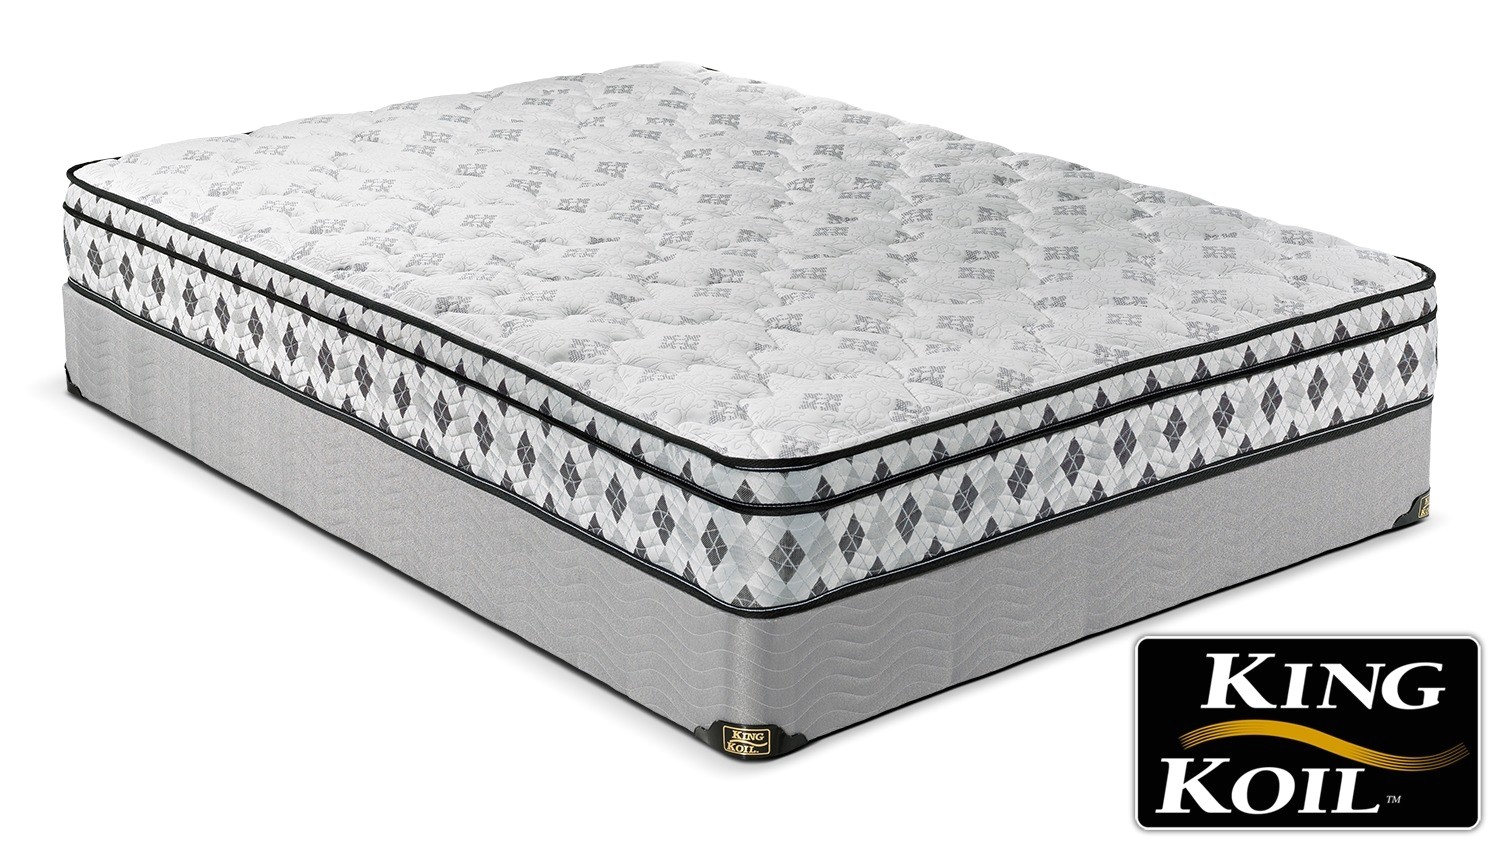 king koil mattress for heavier sleepers